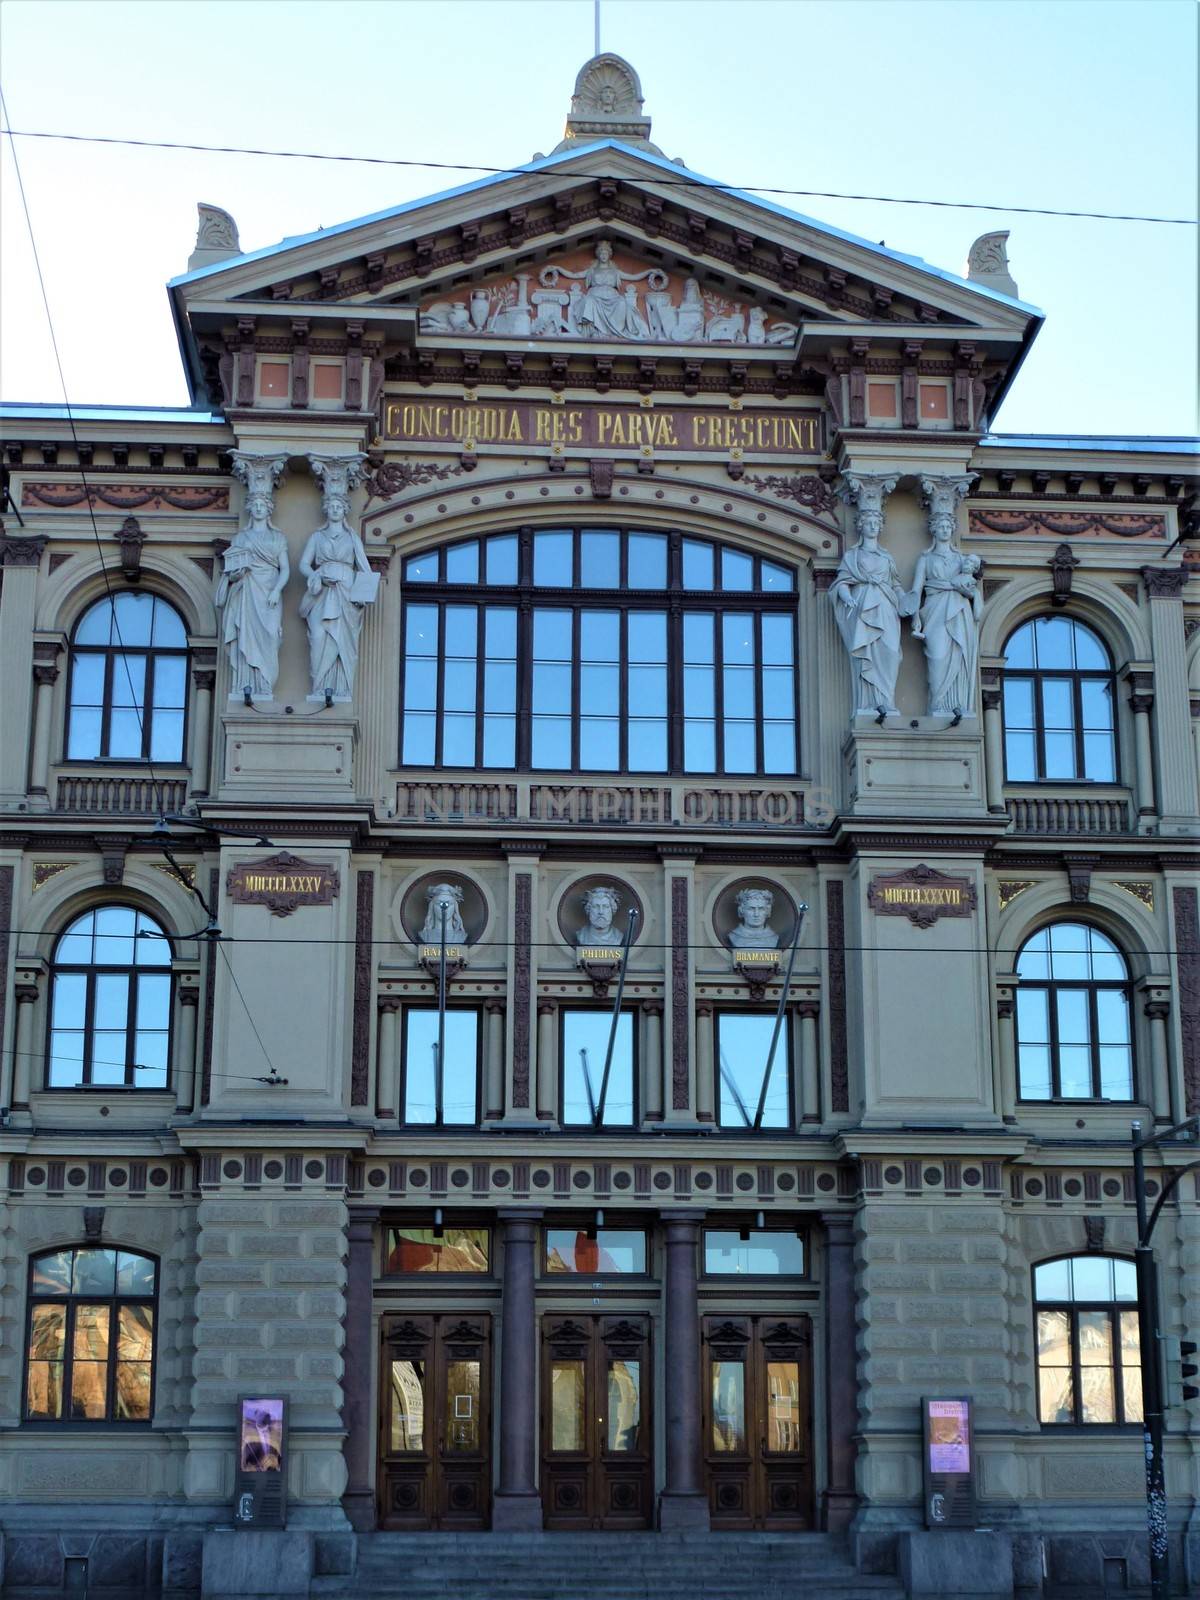 Entrance of the Ateneum art museum in Helsinki, Finland